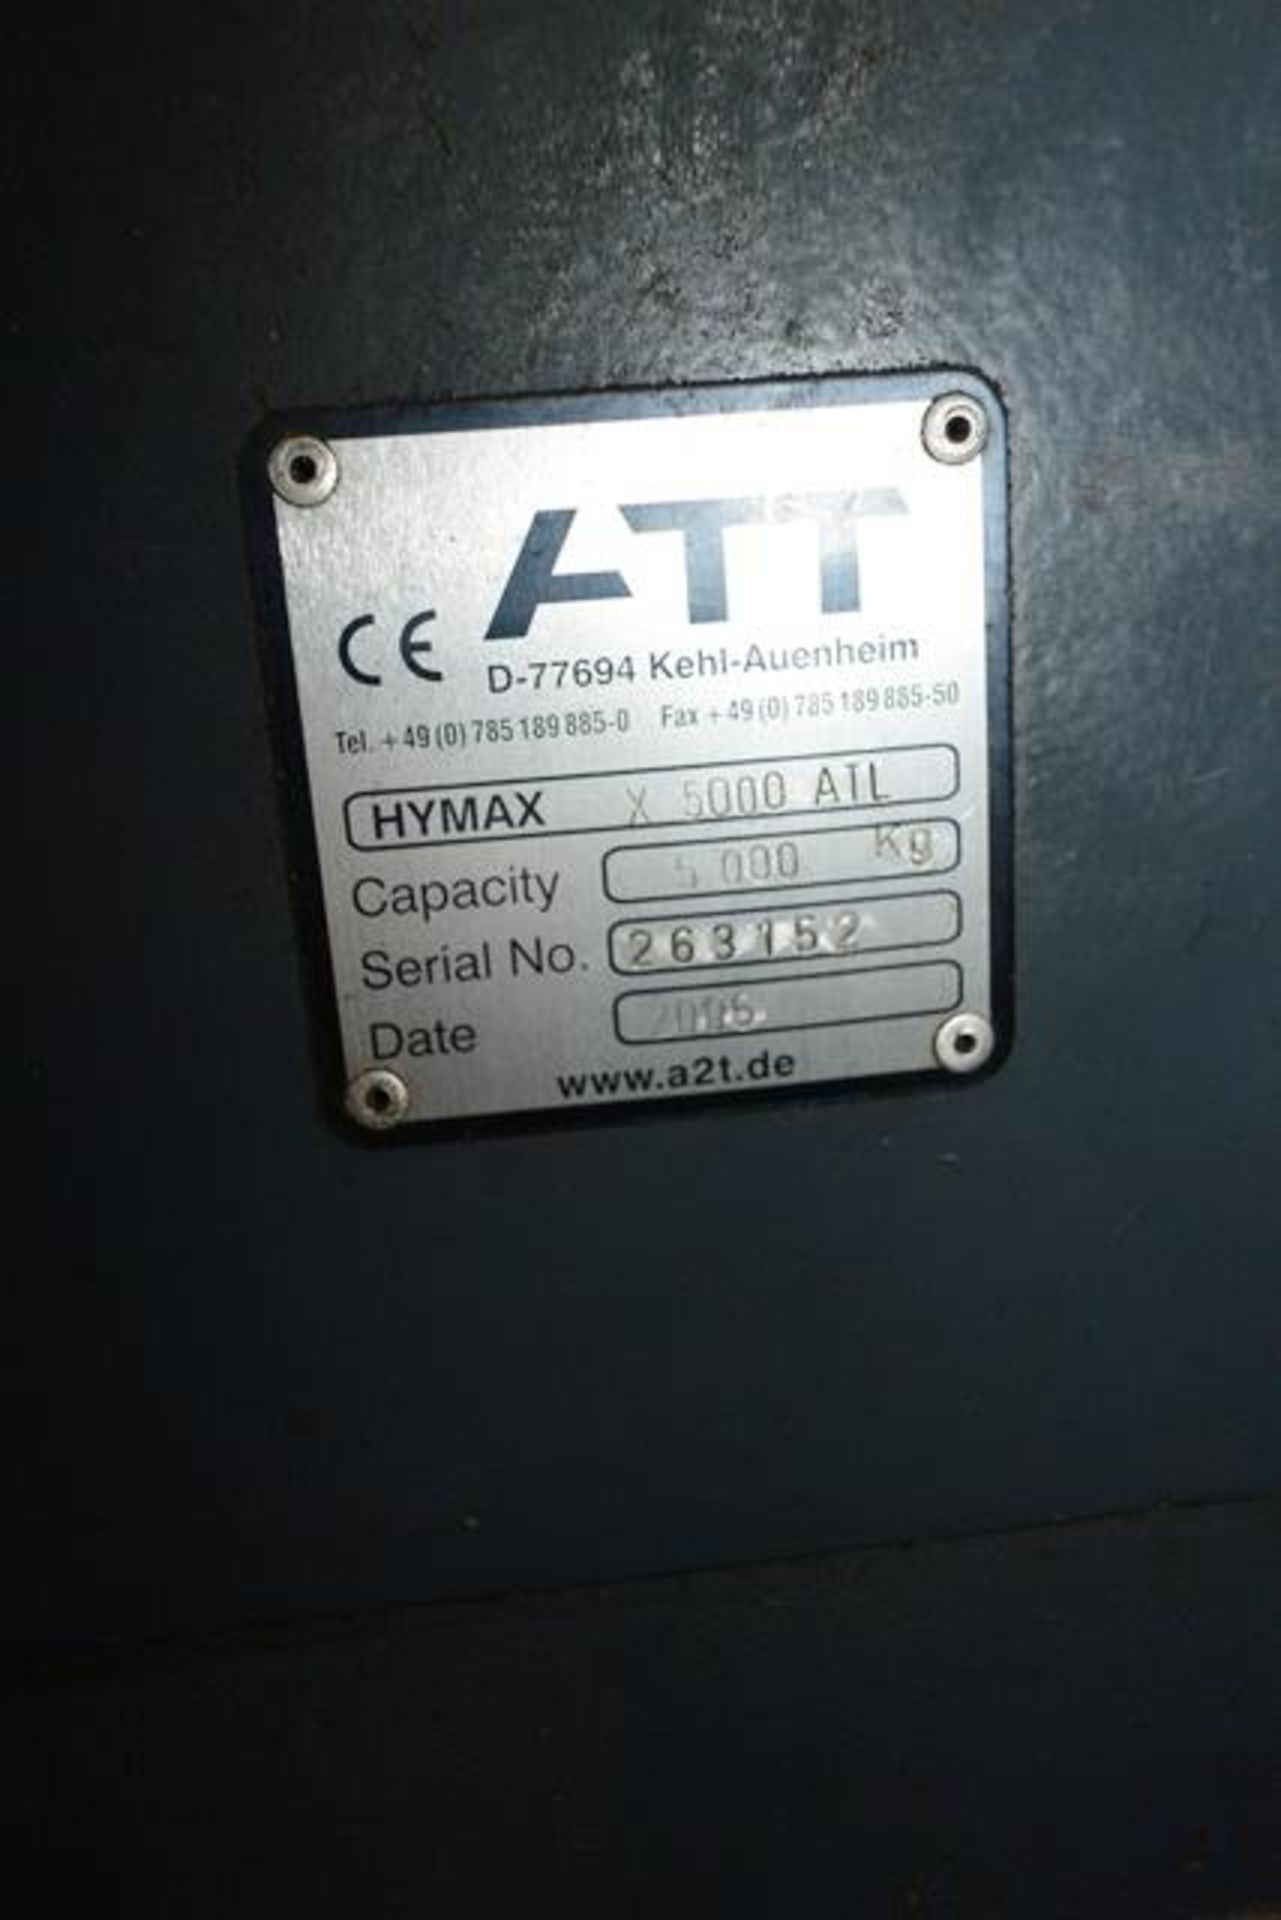 ATT Hymax X5000 ATZ scissor lift inspection ramp, serial no: 263152 (2006), capacity 5000kg with - Image 3 of 4